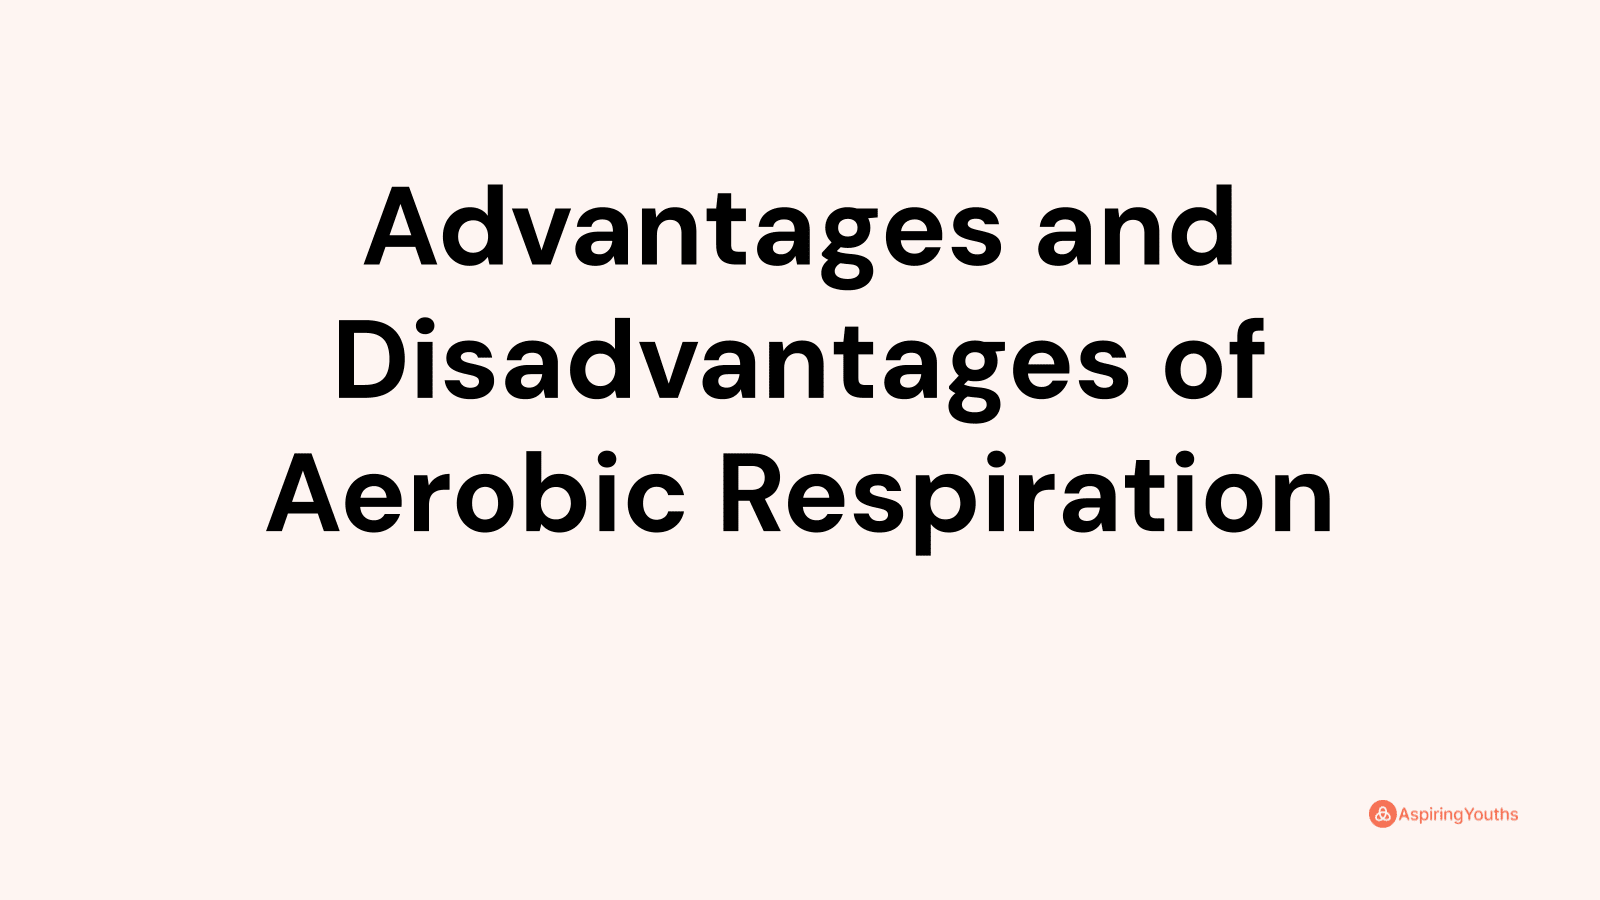 Advantages and disadvantages of Aerobic Respiration